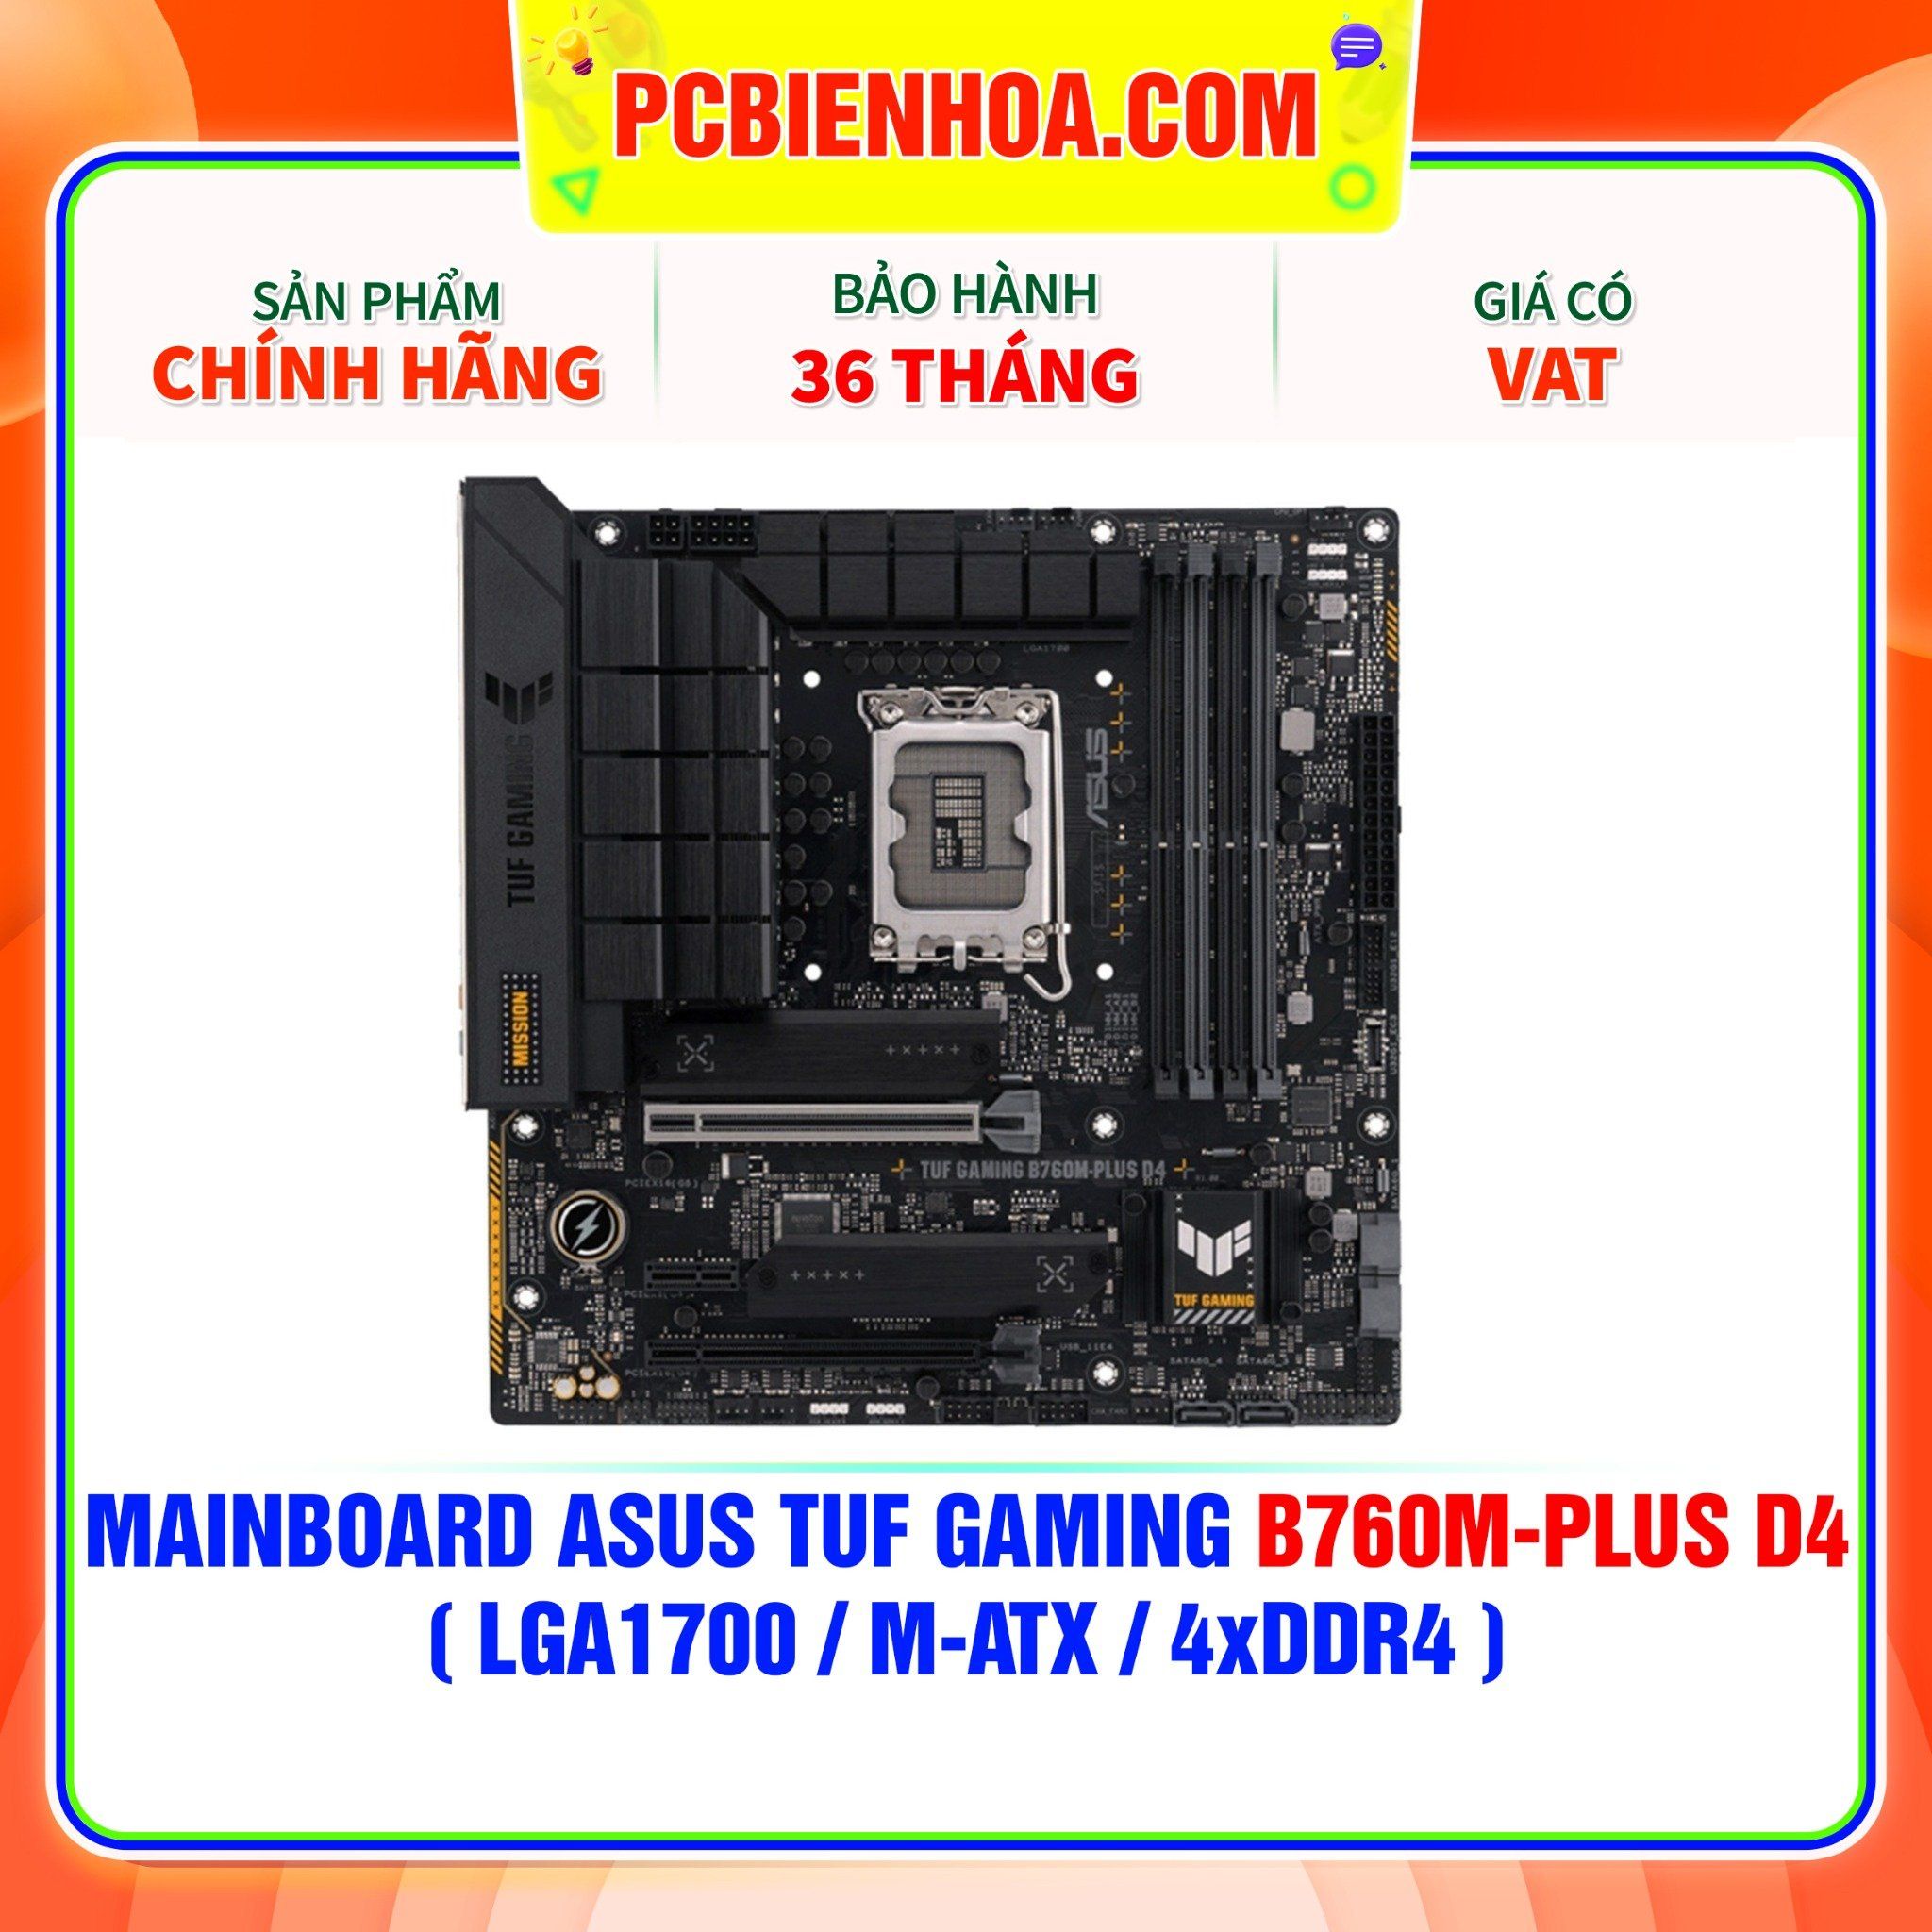  MAINBOARD ASUS TUF GAMING B760M-PLUS D4 ( LGA1700 / m-ATX / 4xDDR4 ) 